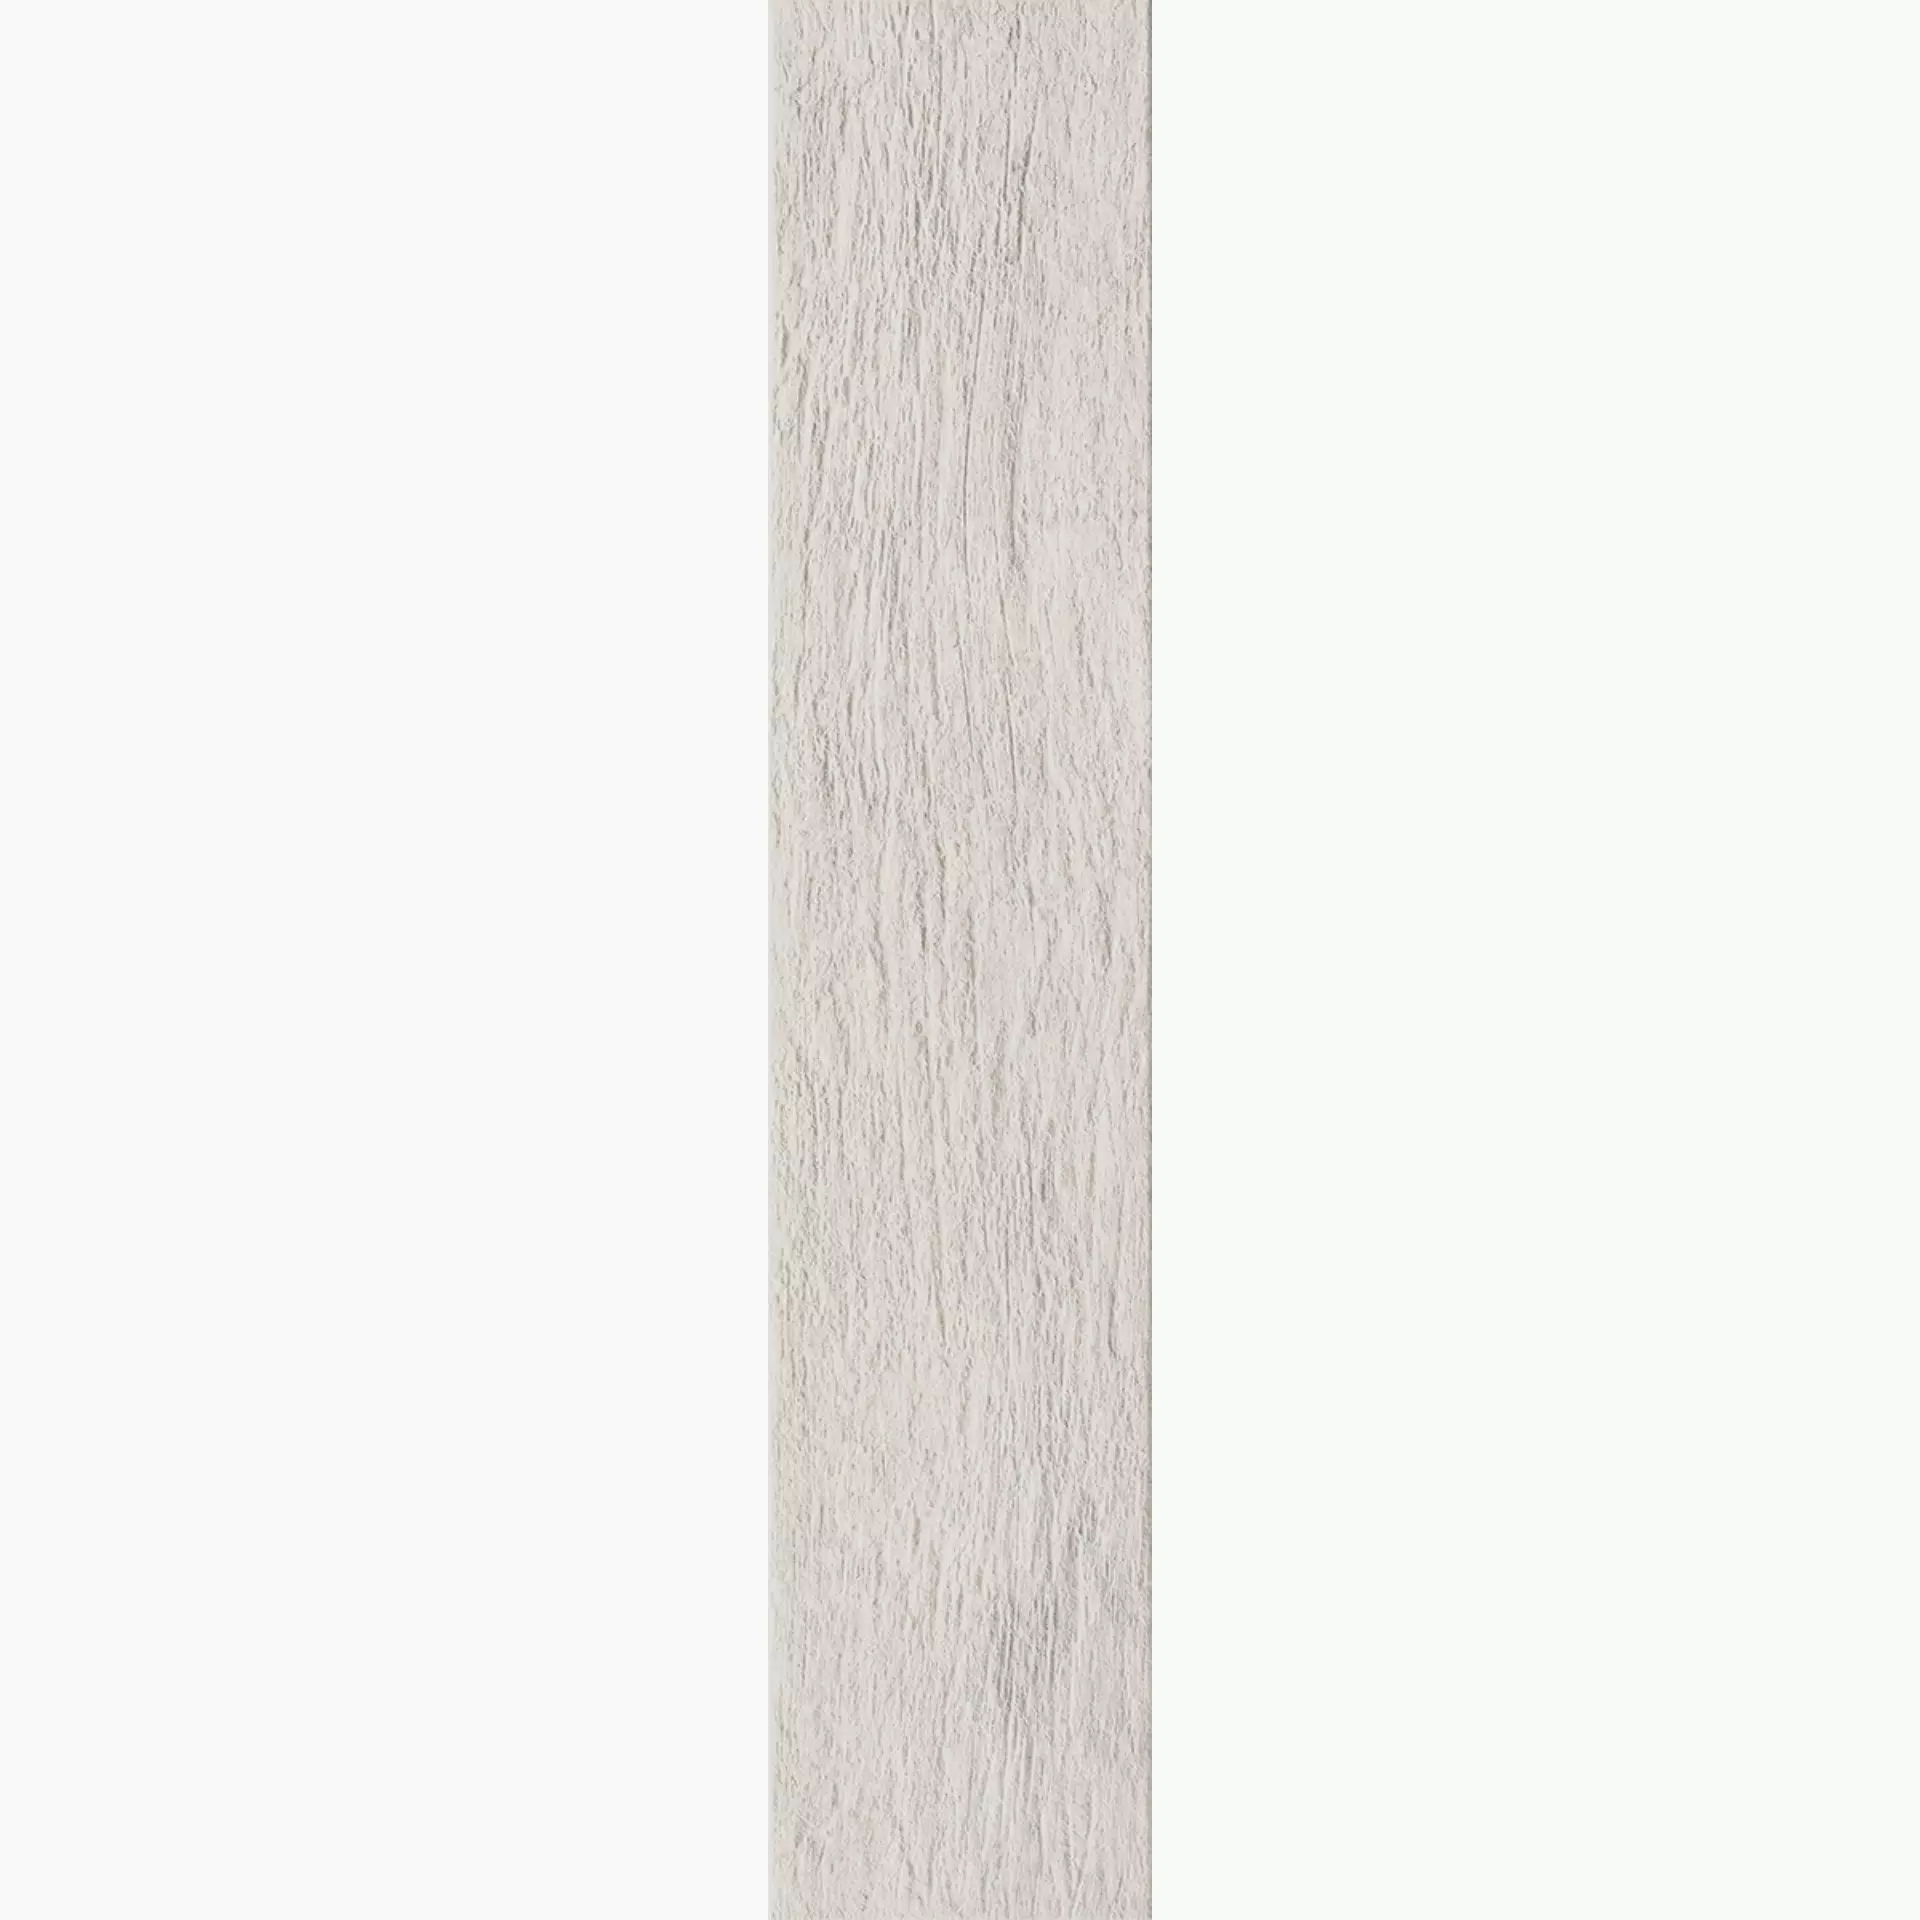 Rondine Greenwood Bianco Strong J86707 24x120cm 8,5mm